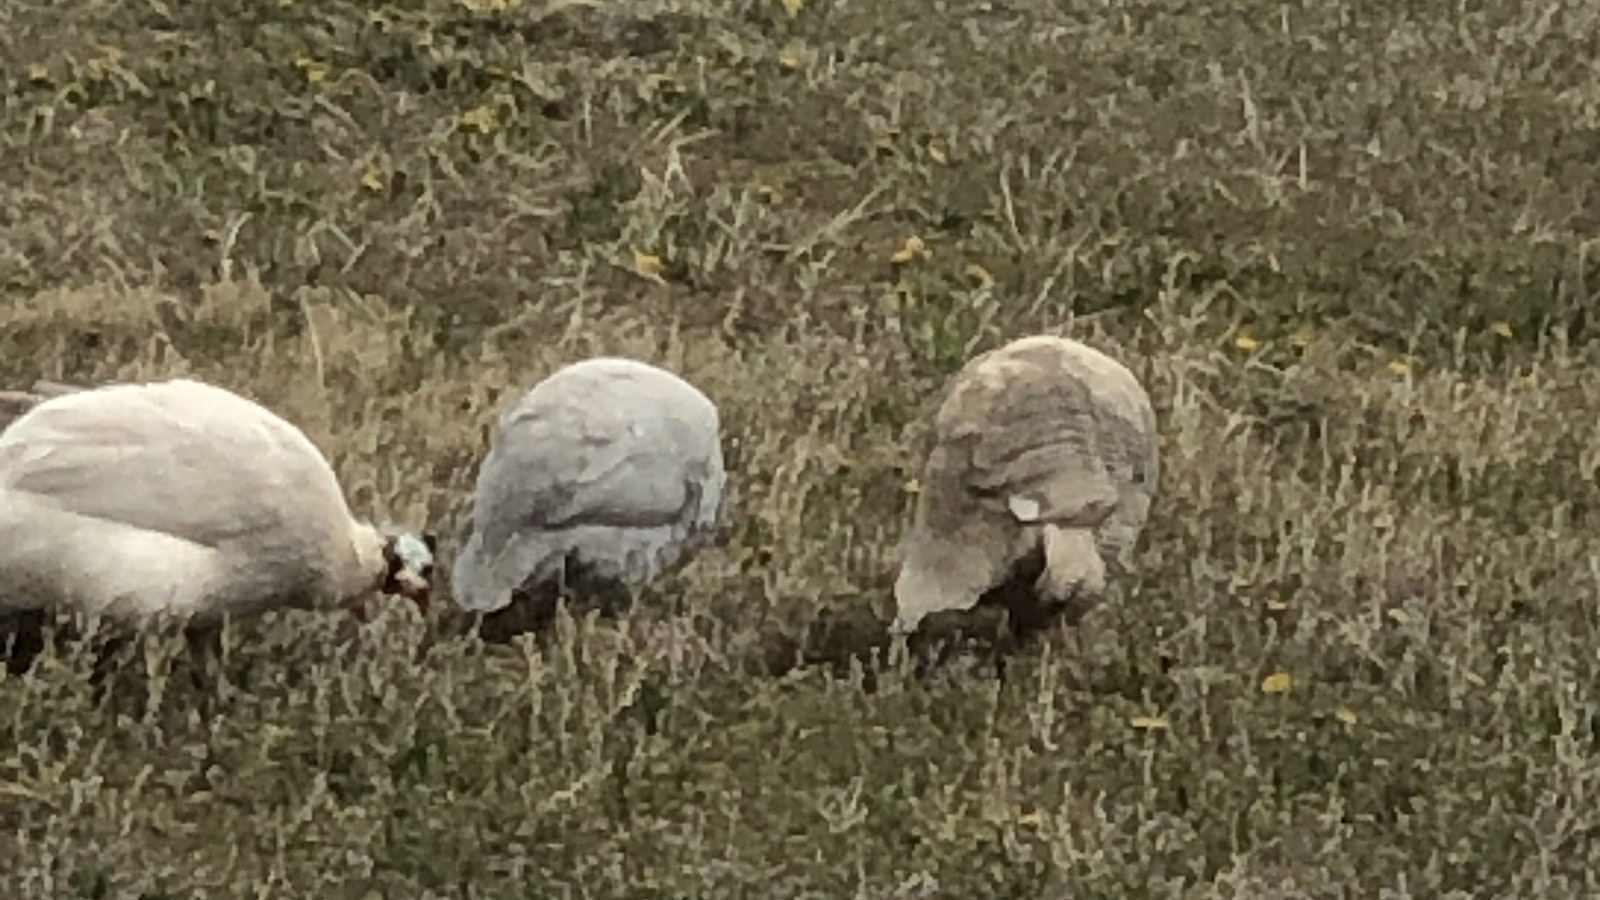 Guinea fowl hunt for ticks on a rural property near Torrington.